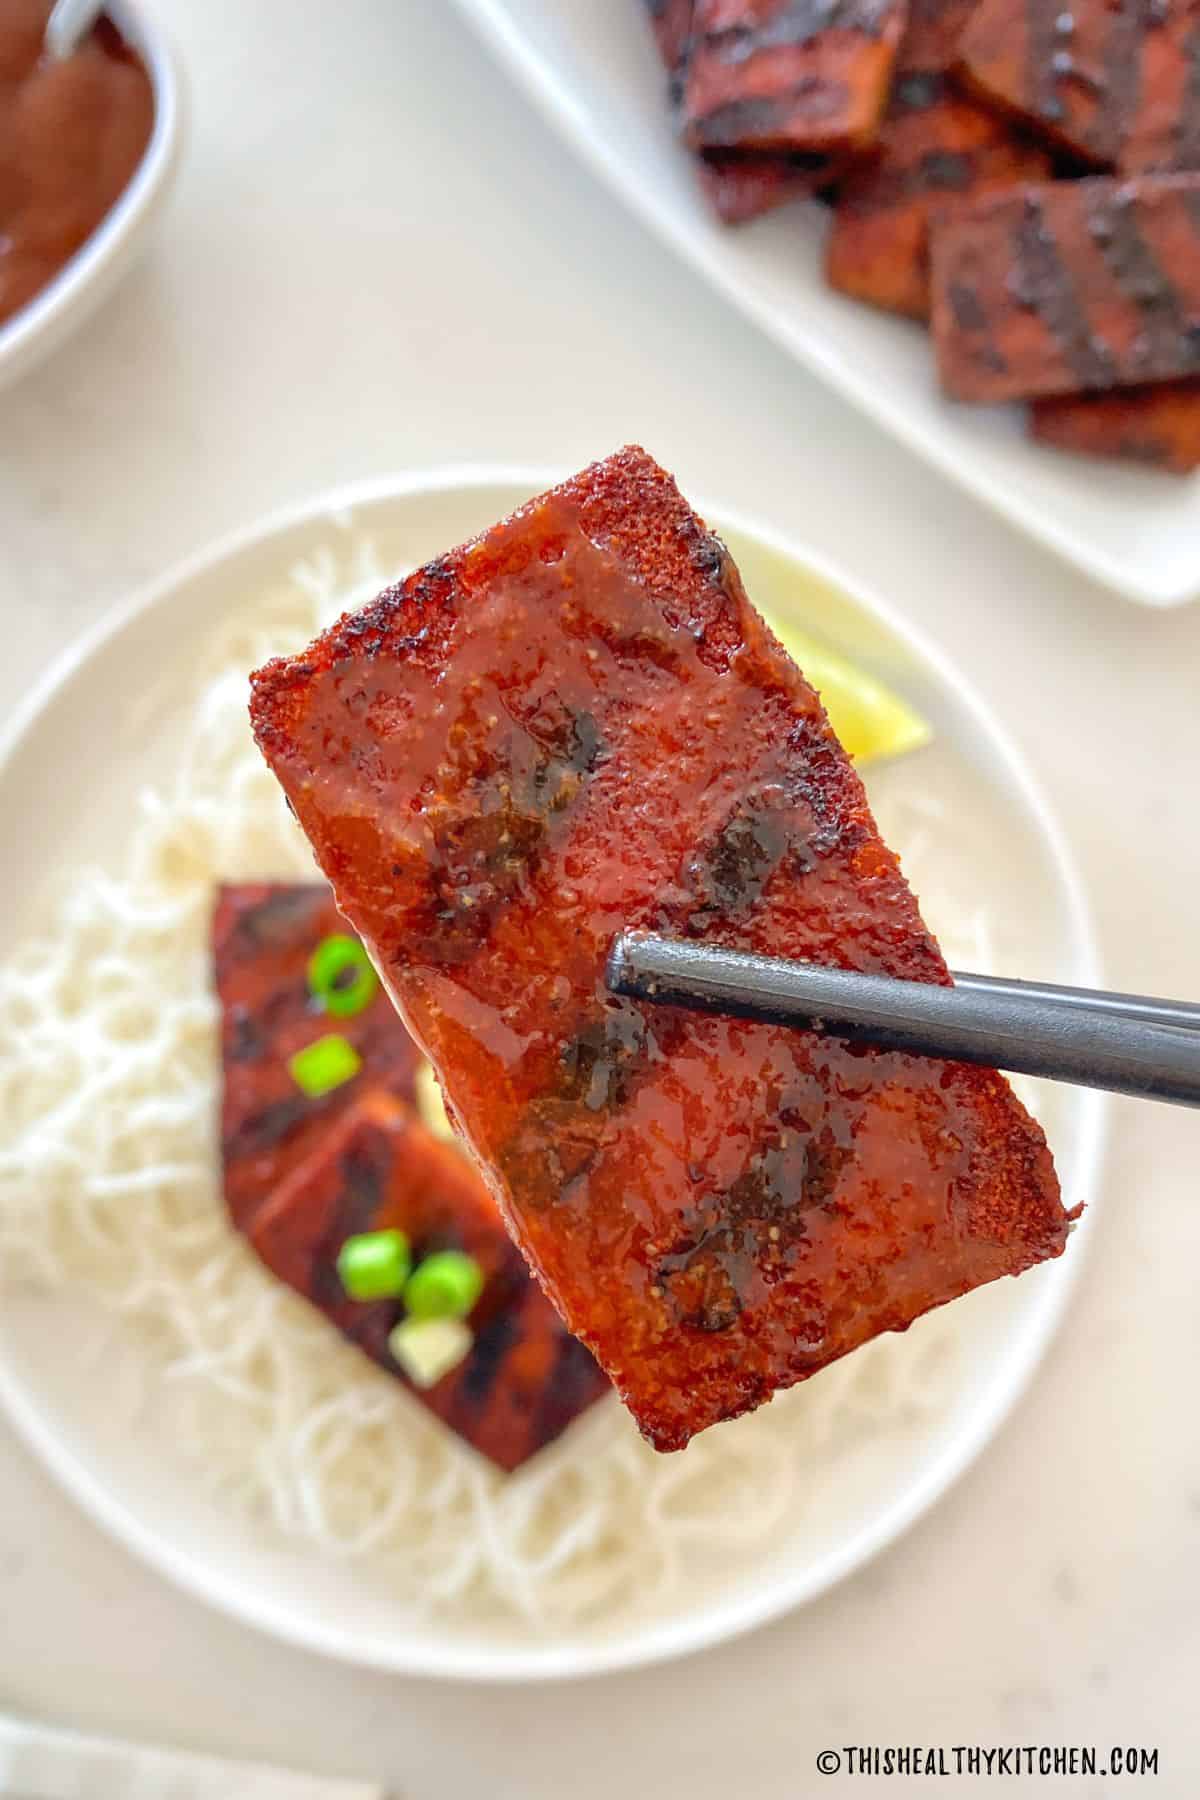 Chopsticks holding up one slice of smoked tofu.